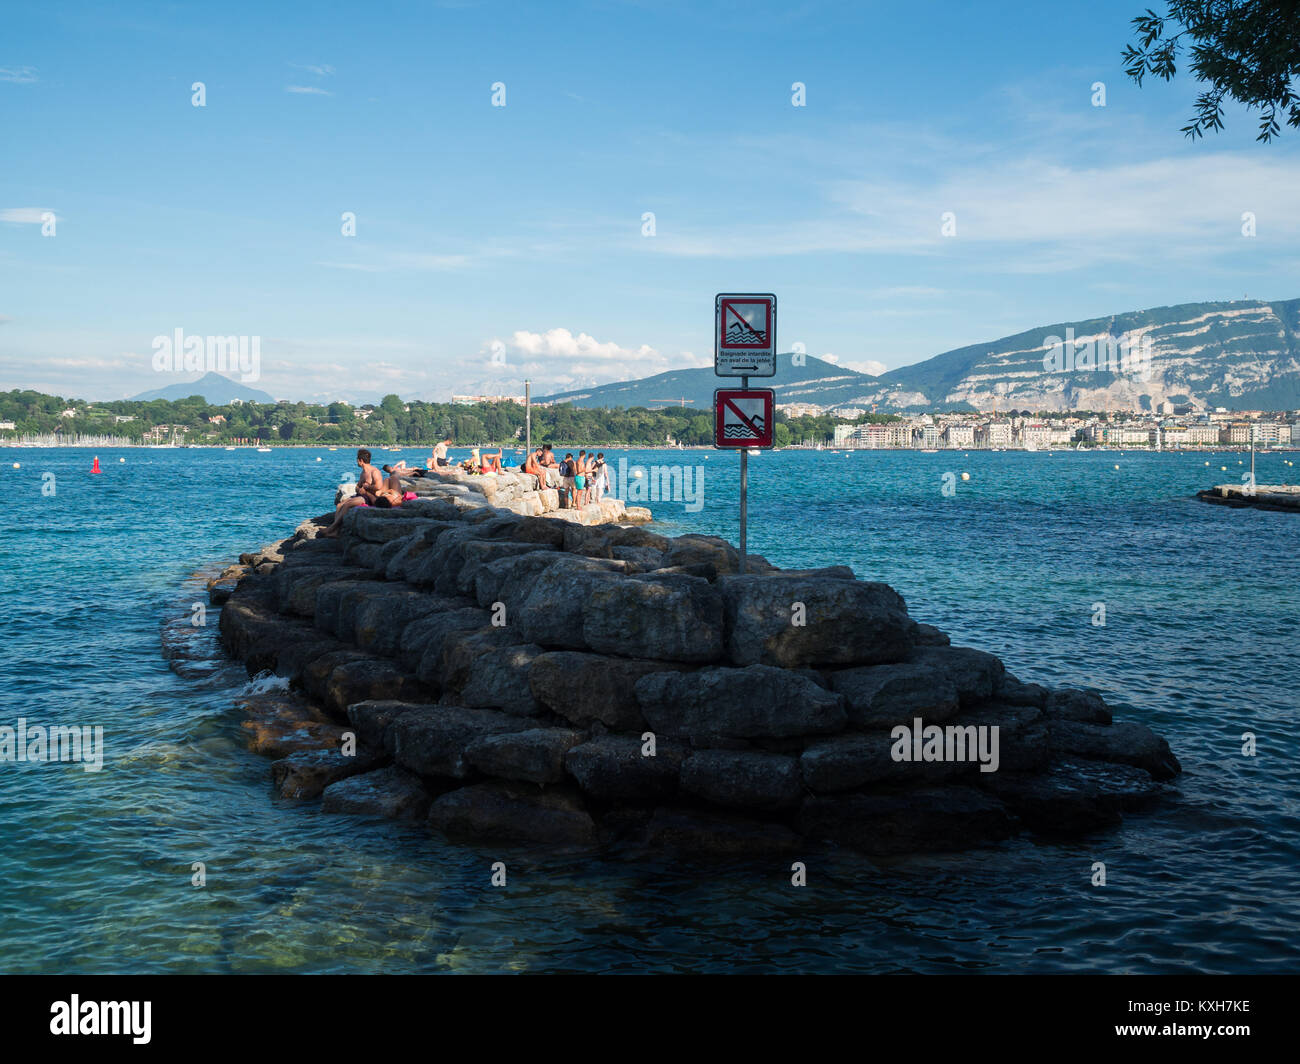 People in the sun in Lake Geneva Stock Photo